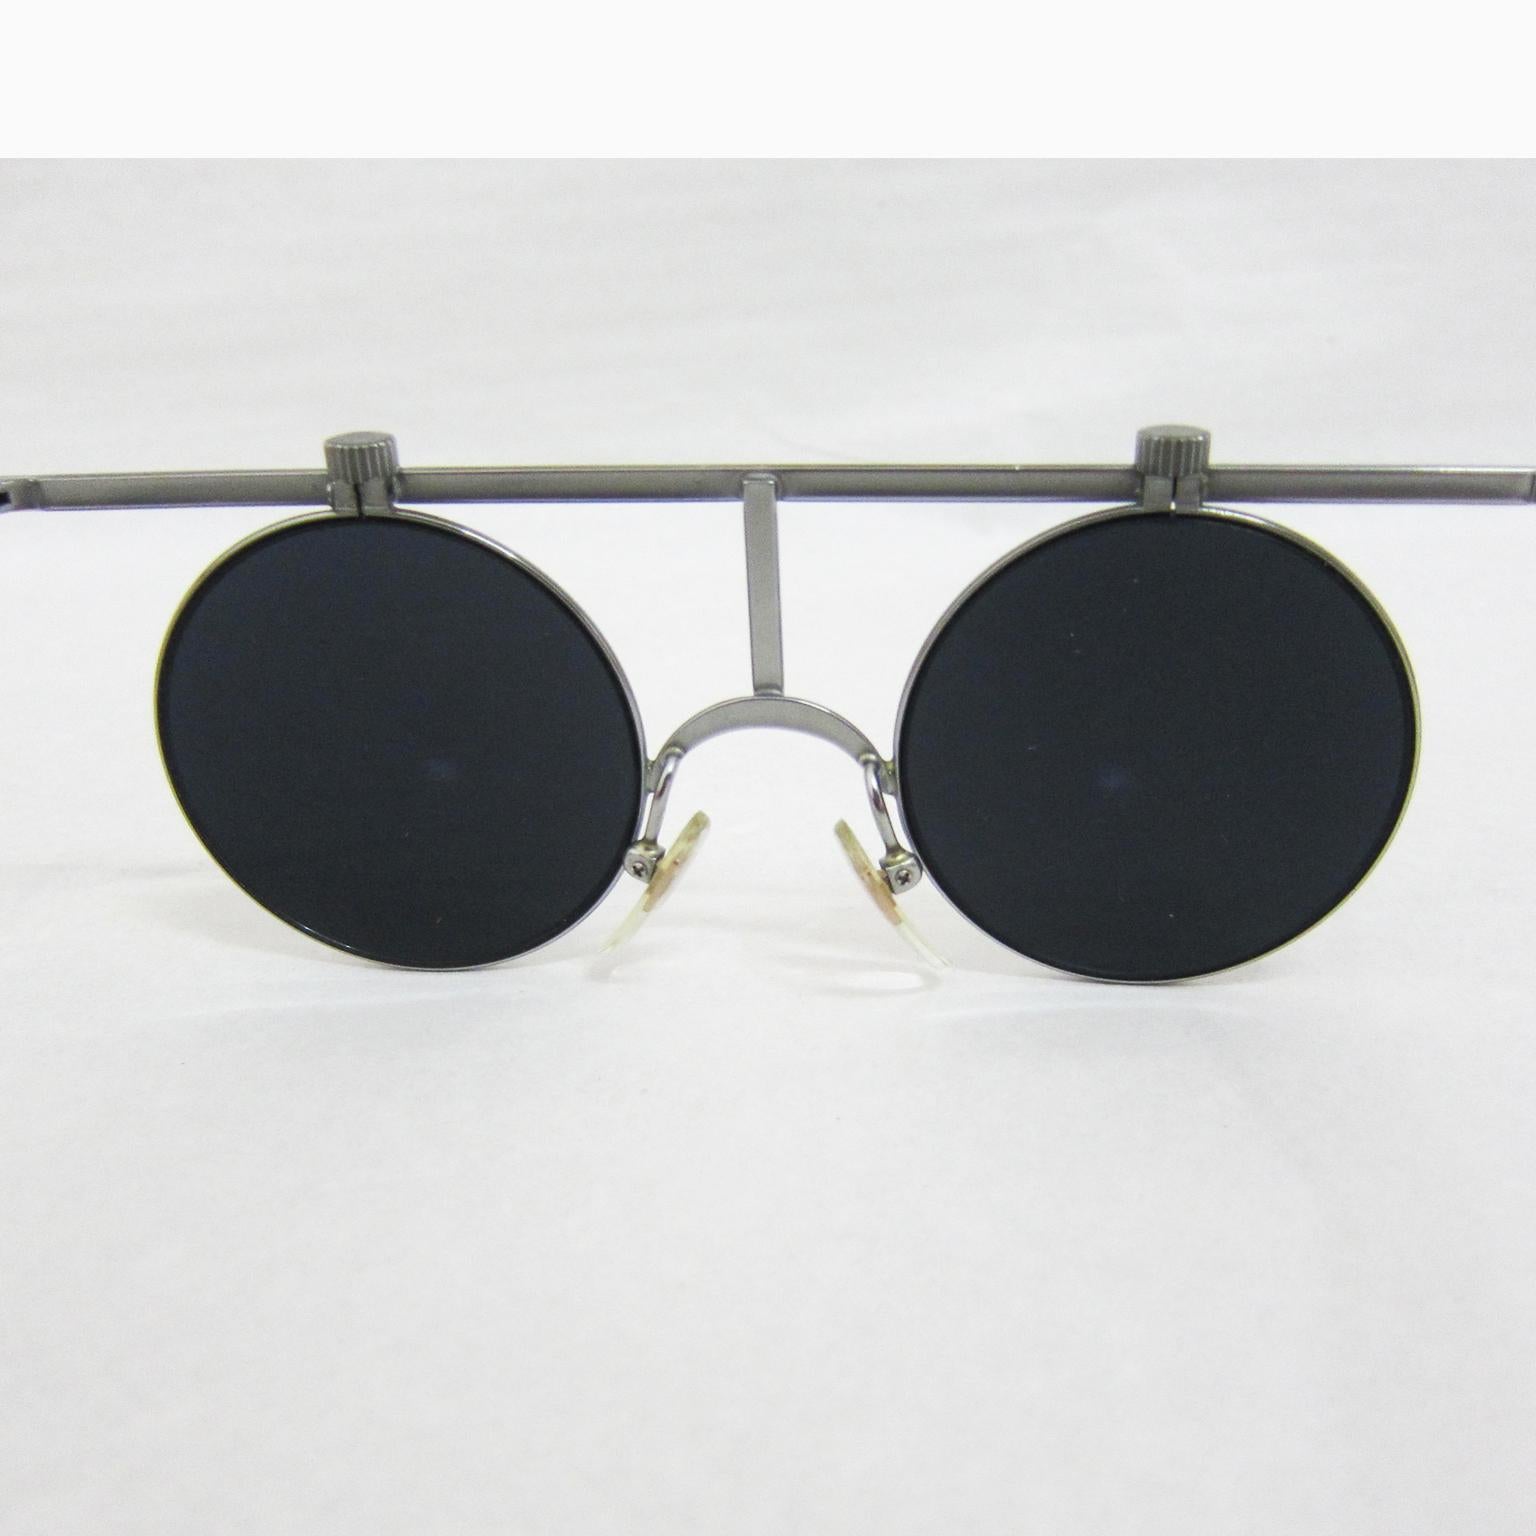 Jean-Michel Basquiat’s Issey Miyake sunglasses 1985 3